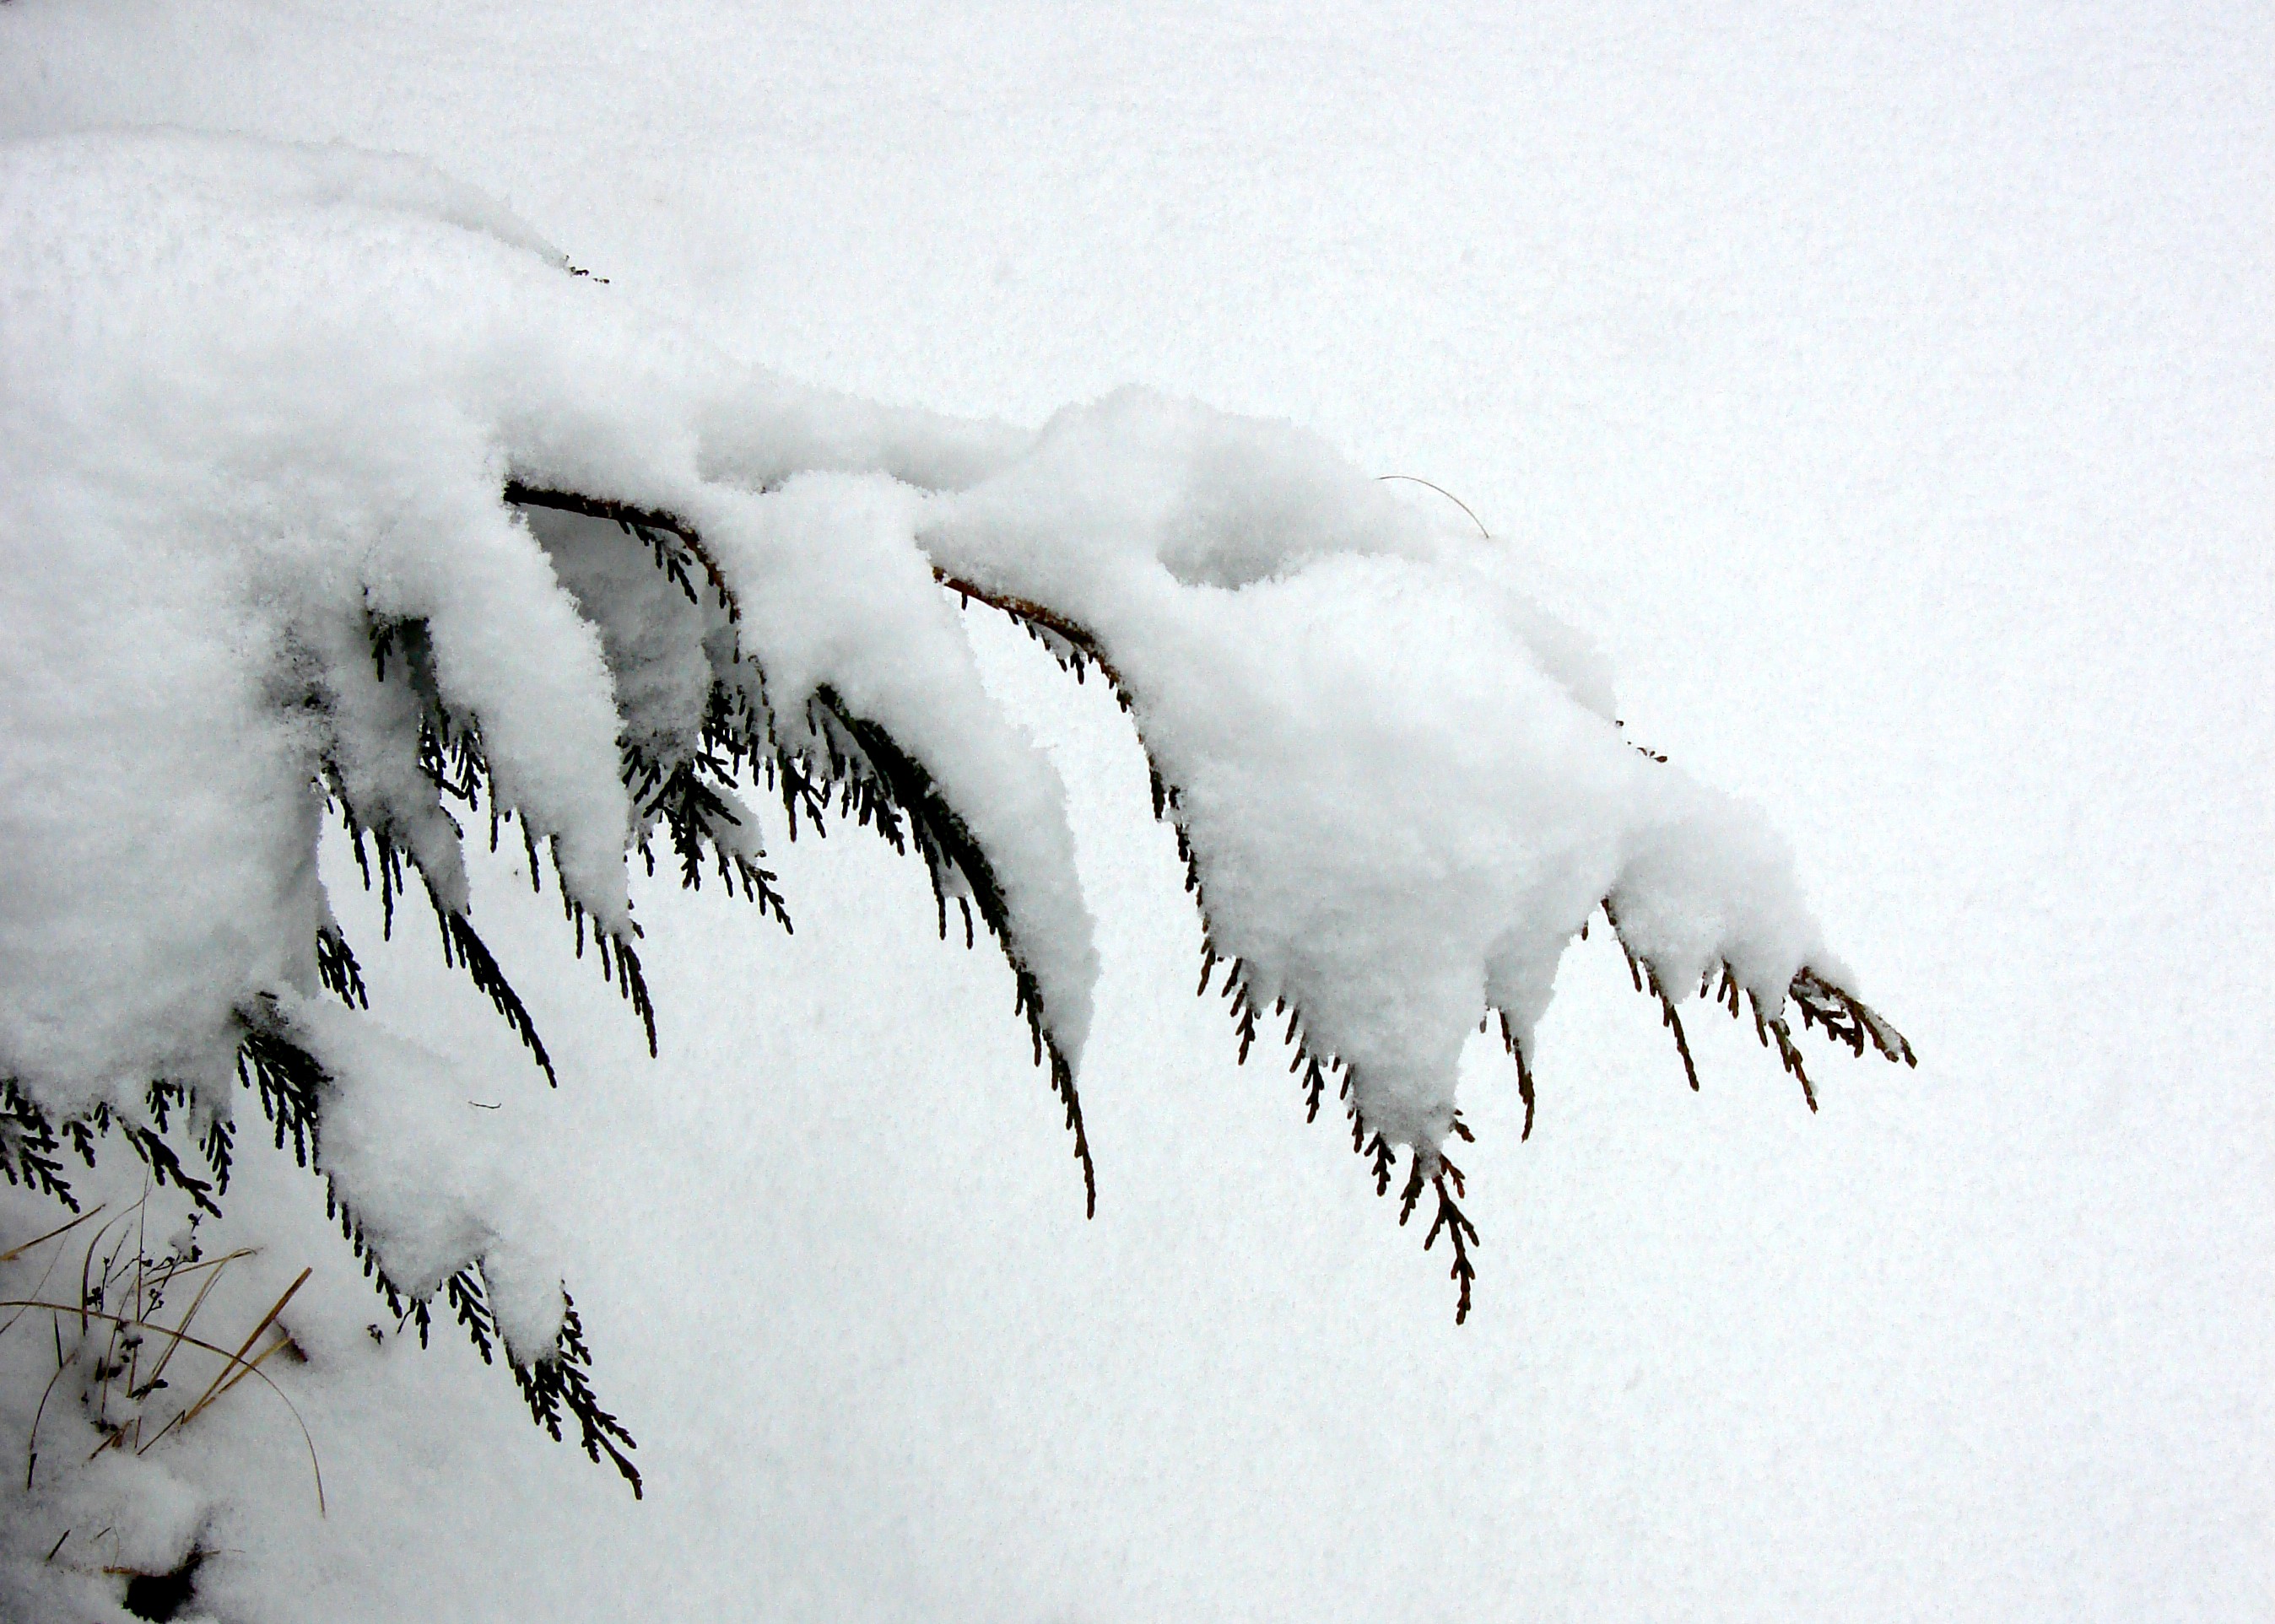 Snow on Evergreen Branch